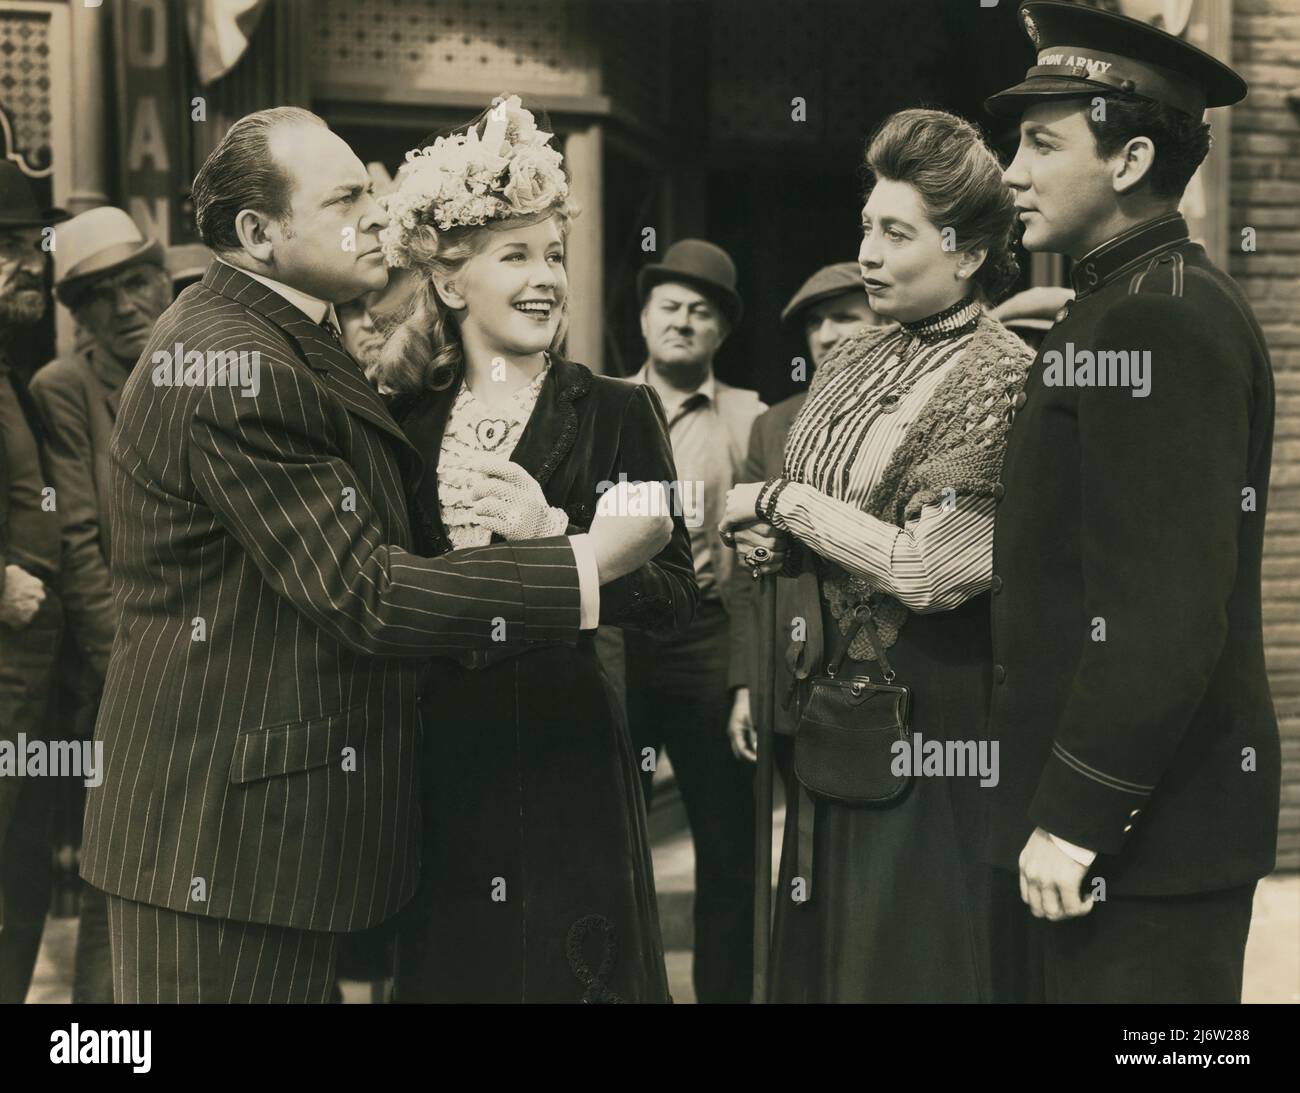 Edward Arnold (1890-1956), Schauspieler de Cine estadounidense, Dorothy Patrick (1921-1987), actriz canadiense, Aline MacMahon (1899-1991), actriz estadounidense, Y Cameron Mitchell (1918-1994), Schauspieler estadounidense. Stockfoto